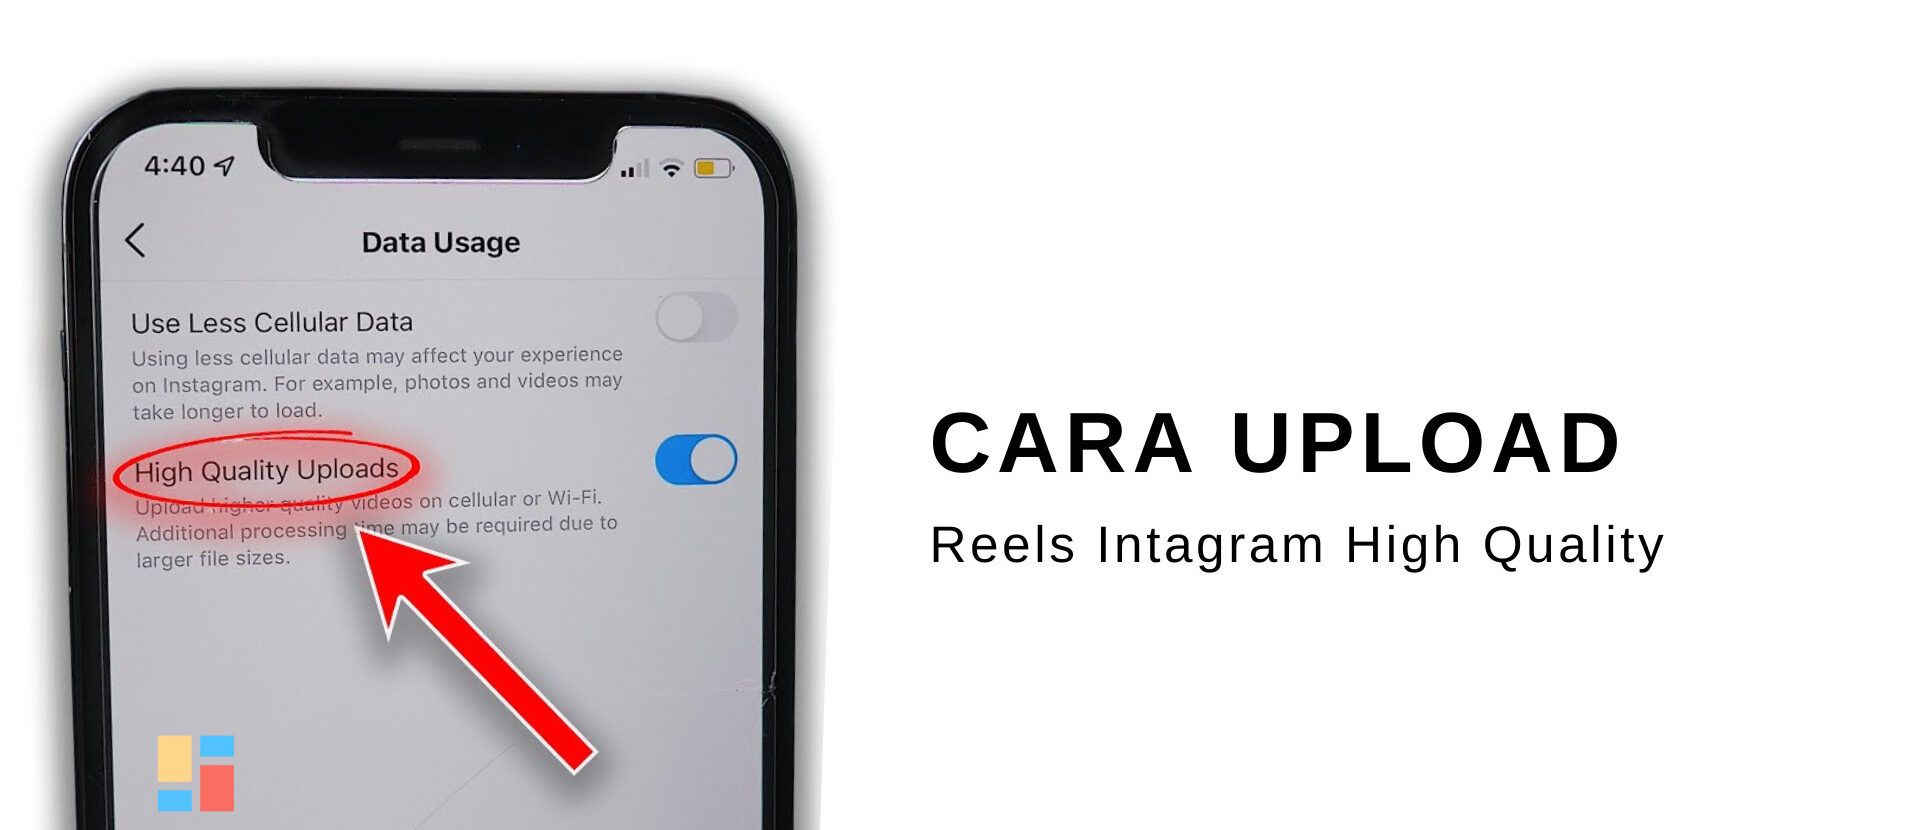 Cara Upload Reels Intagram High Quality